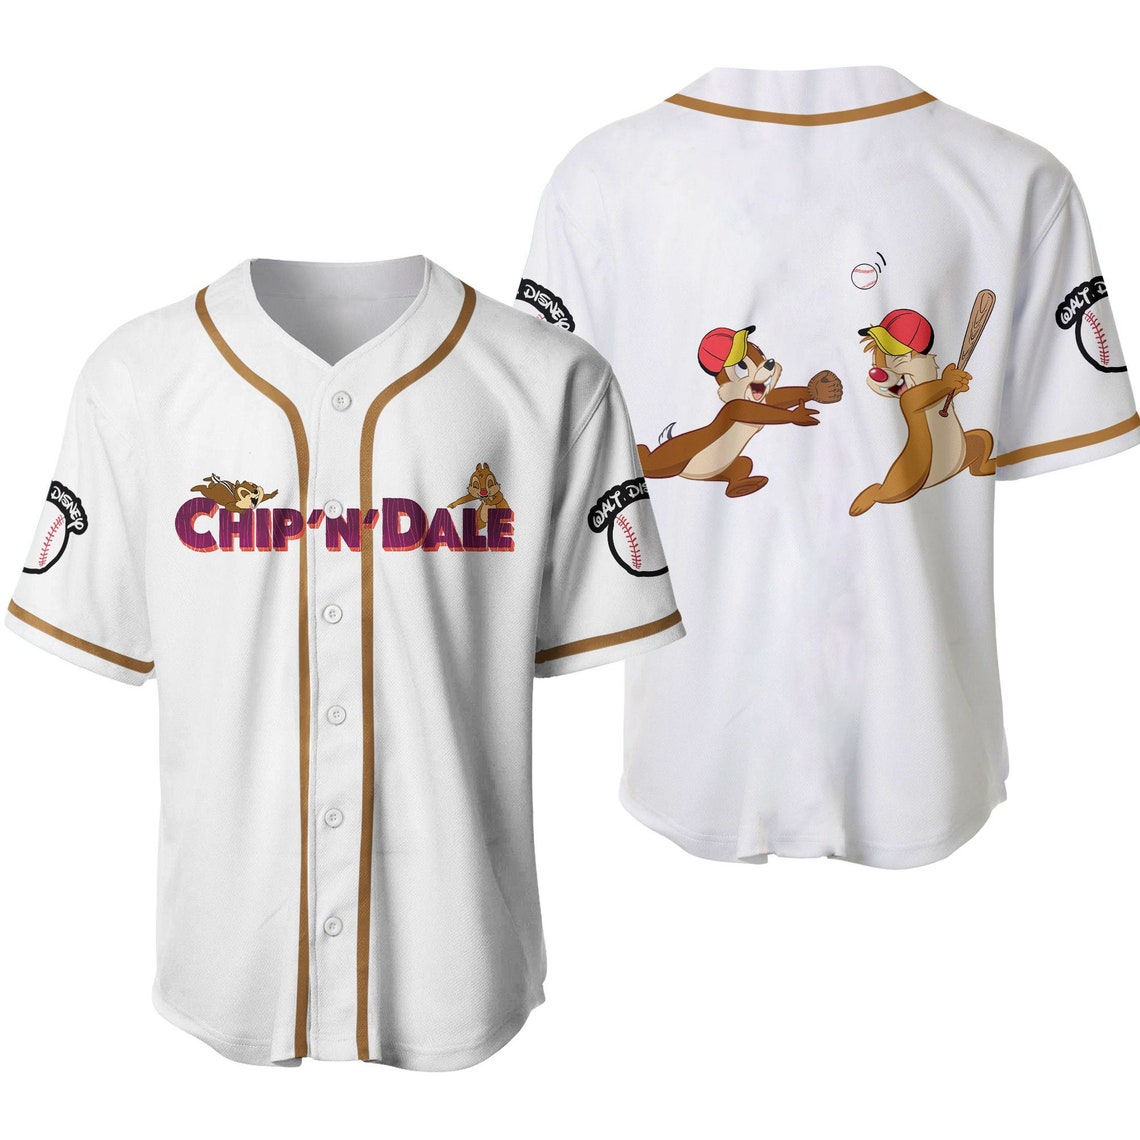 Chip Dale Chipmunks White Brown Cute Disney Unisex Cartoon Custom Baseball Jersey Personalized Shirt Men Women